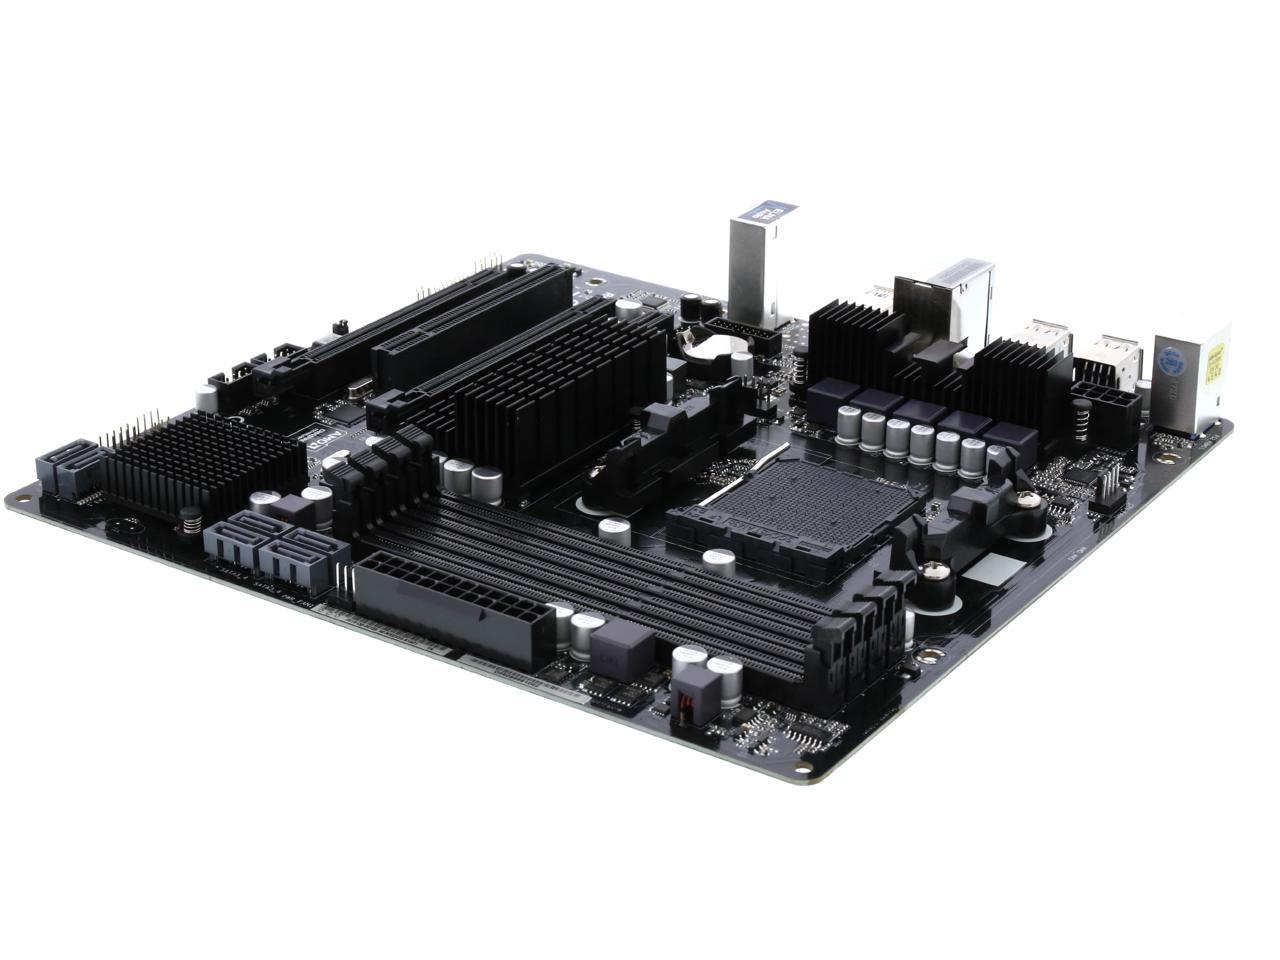 ASRock 970M Pro3 AM3+/AM3 Micro ATX AMD Motherboard - Newegg.com